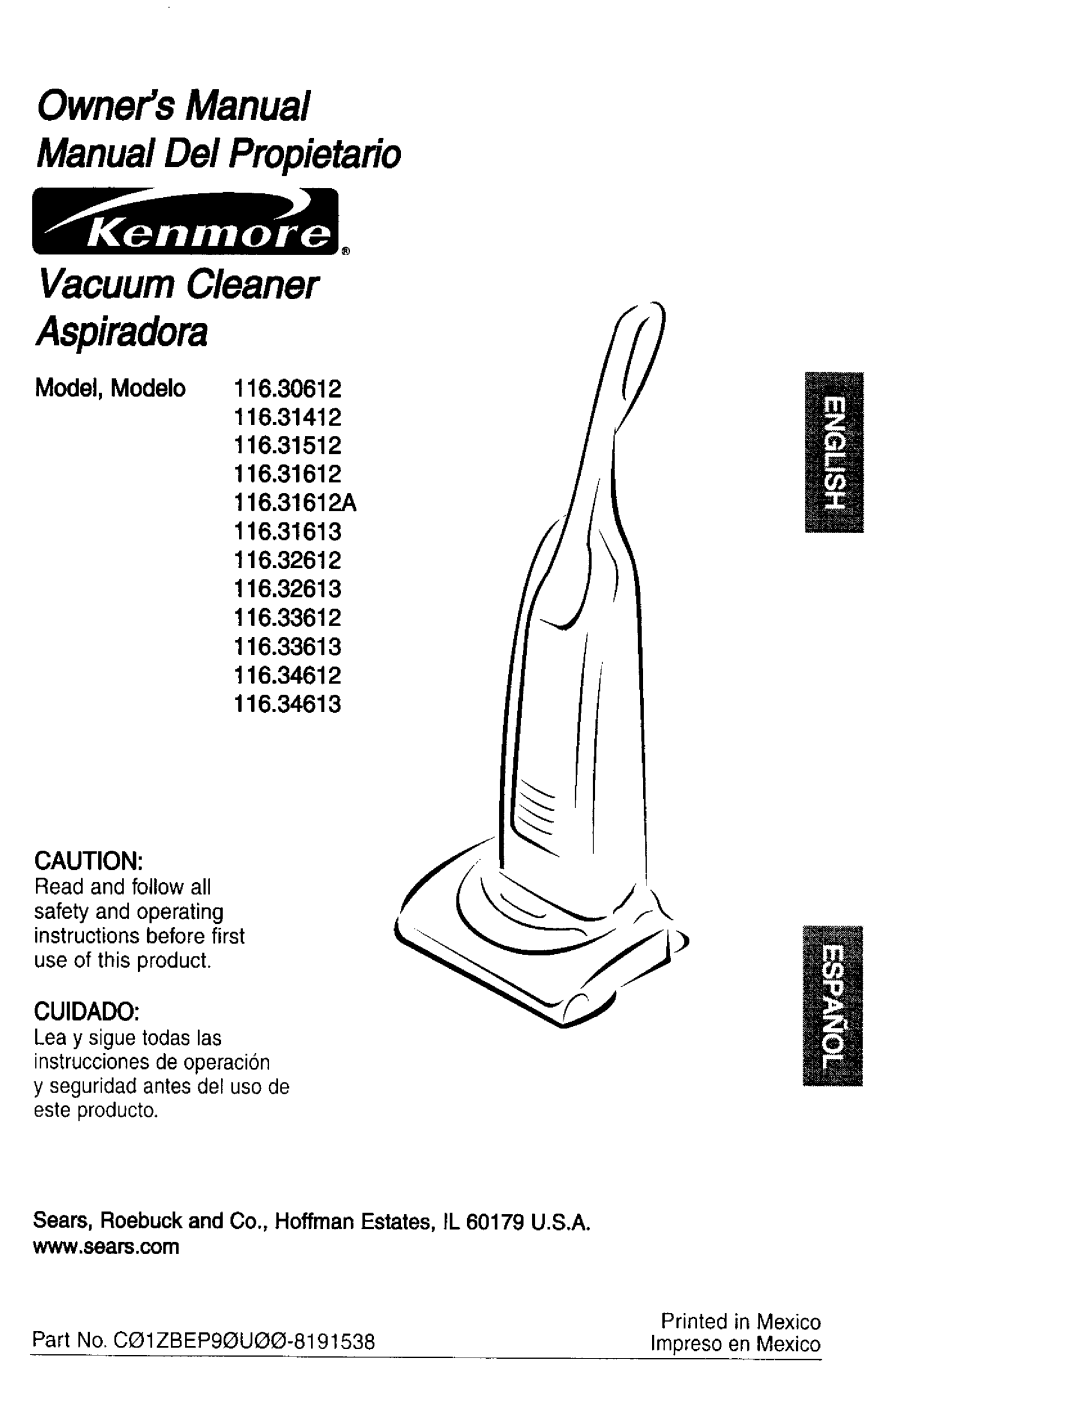 Kenmore 613, 11 owner manual OwnersManual ManualDel Propietario VacuumCleaner, Aspiradora, Cuidado, Read and follow all 